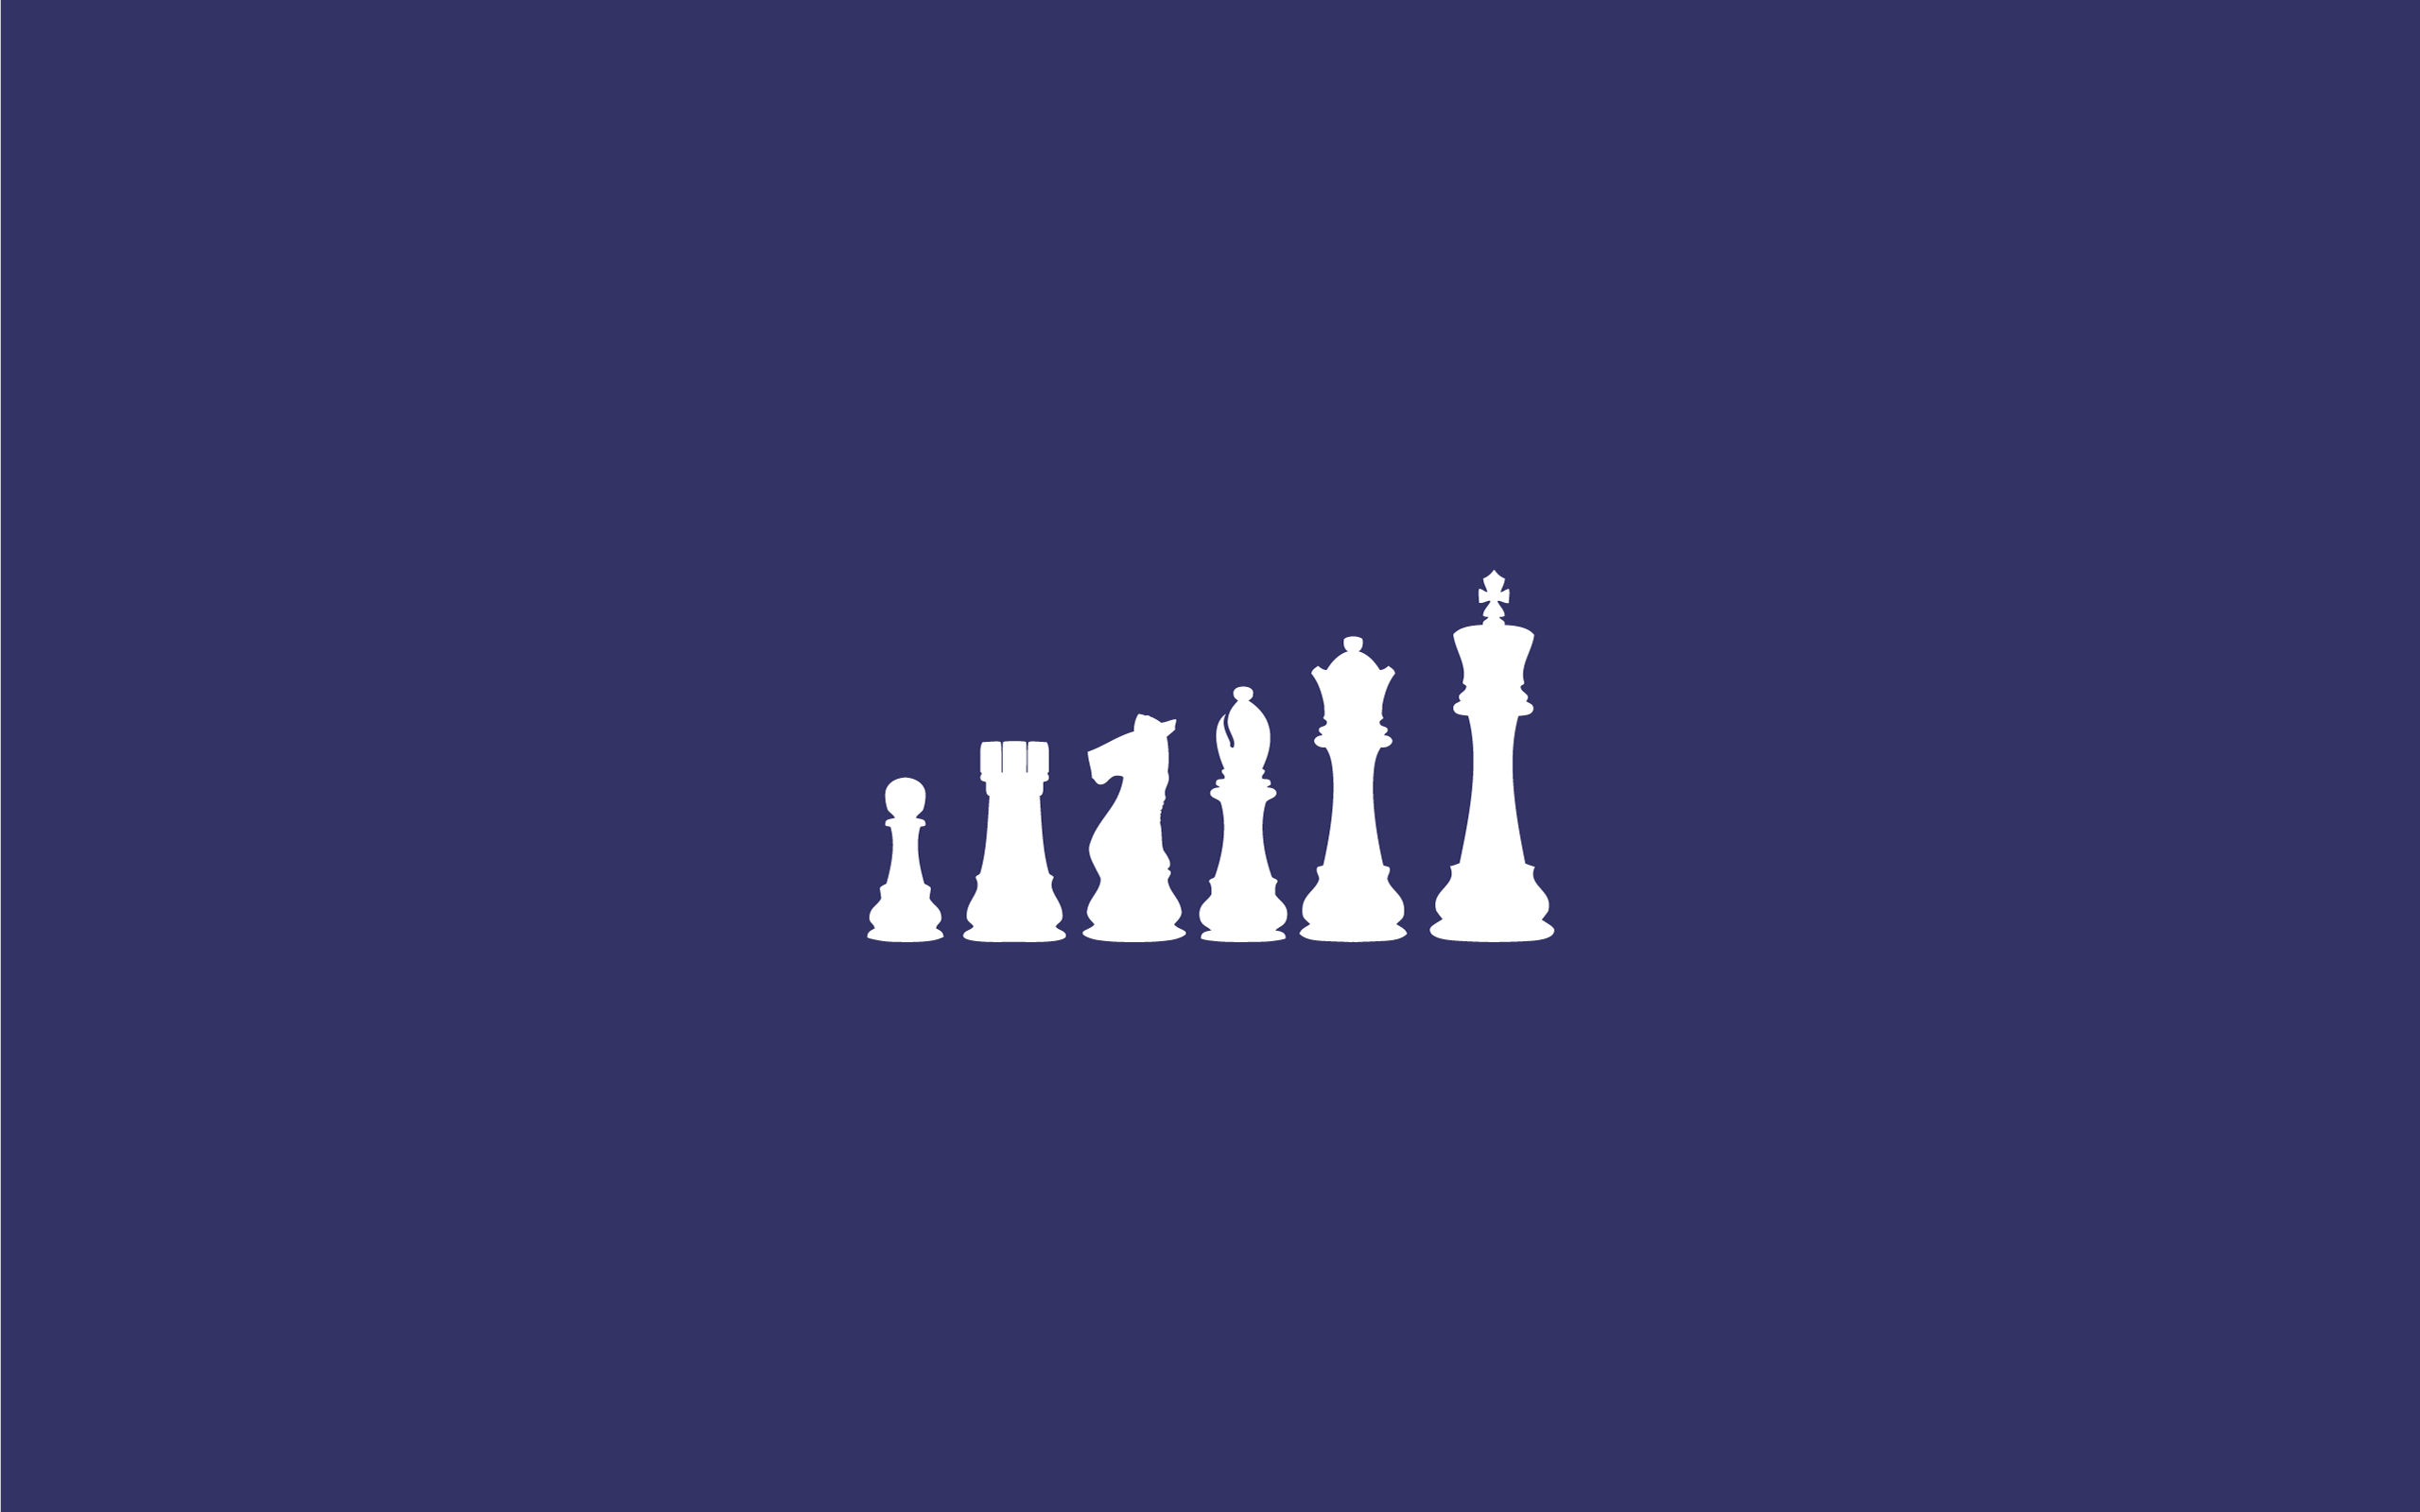 General 2560x1600 chess board games minimalism digital art simple background violet